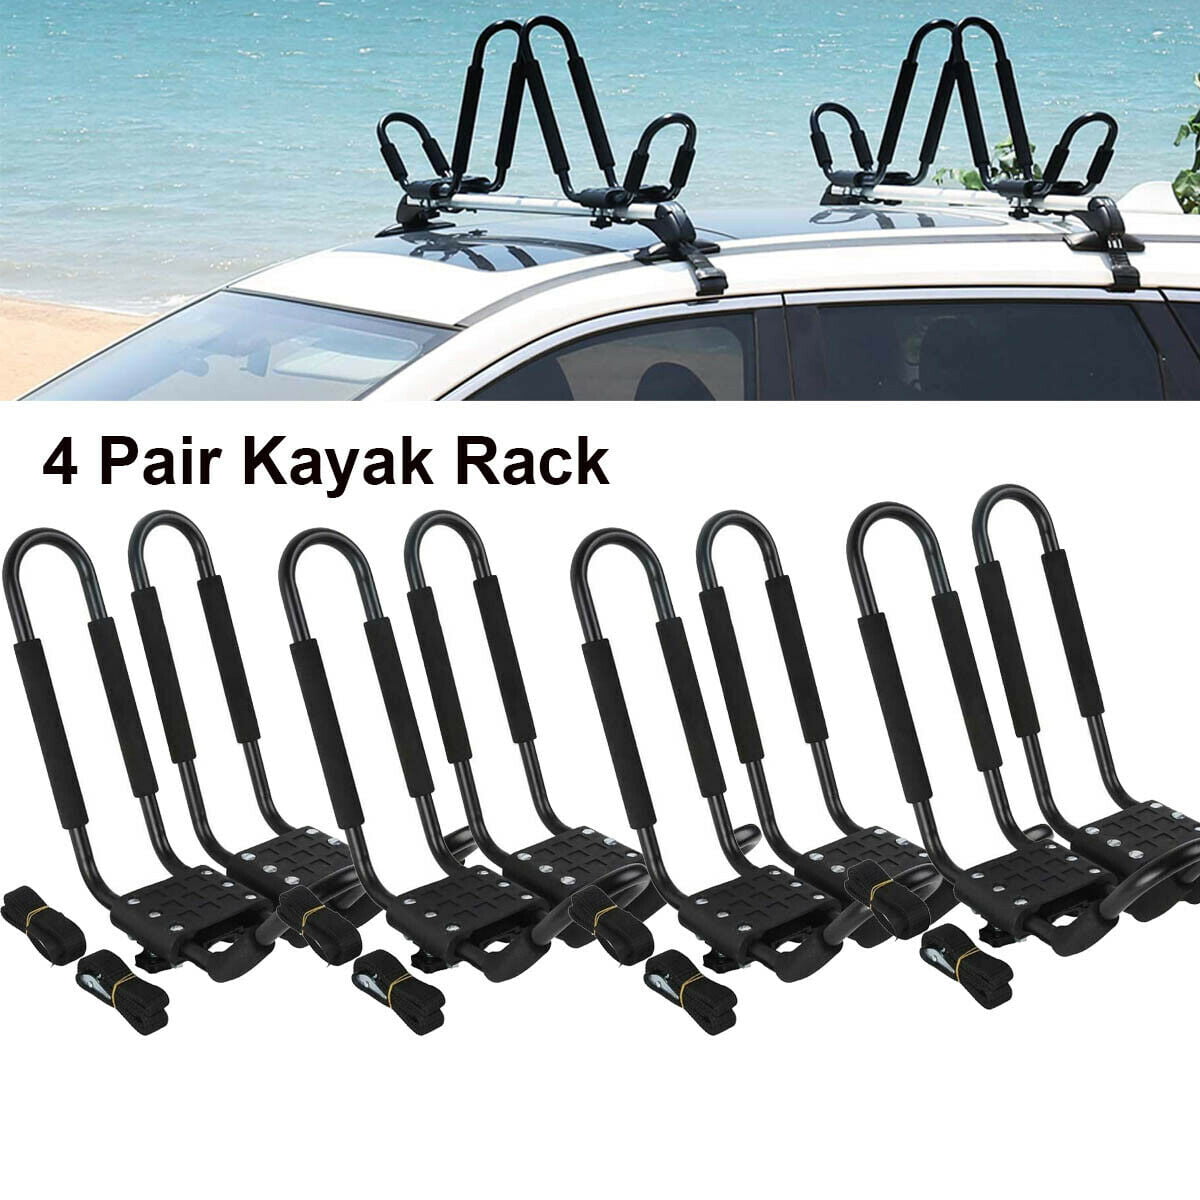 2 Pair Canoe Boat Kayak Roof Rack Car SUV Truck Top Mount Carrier J Cross Bar 